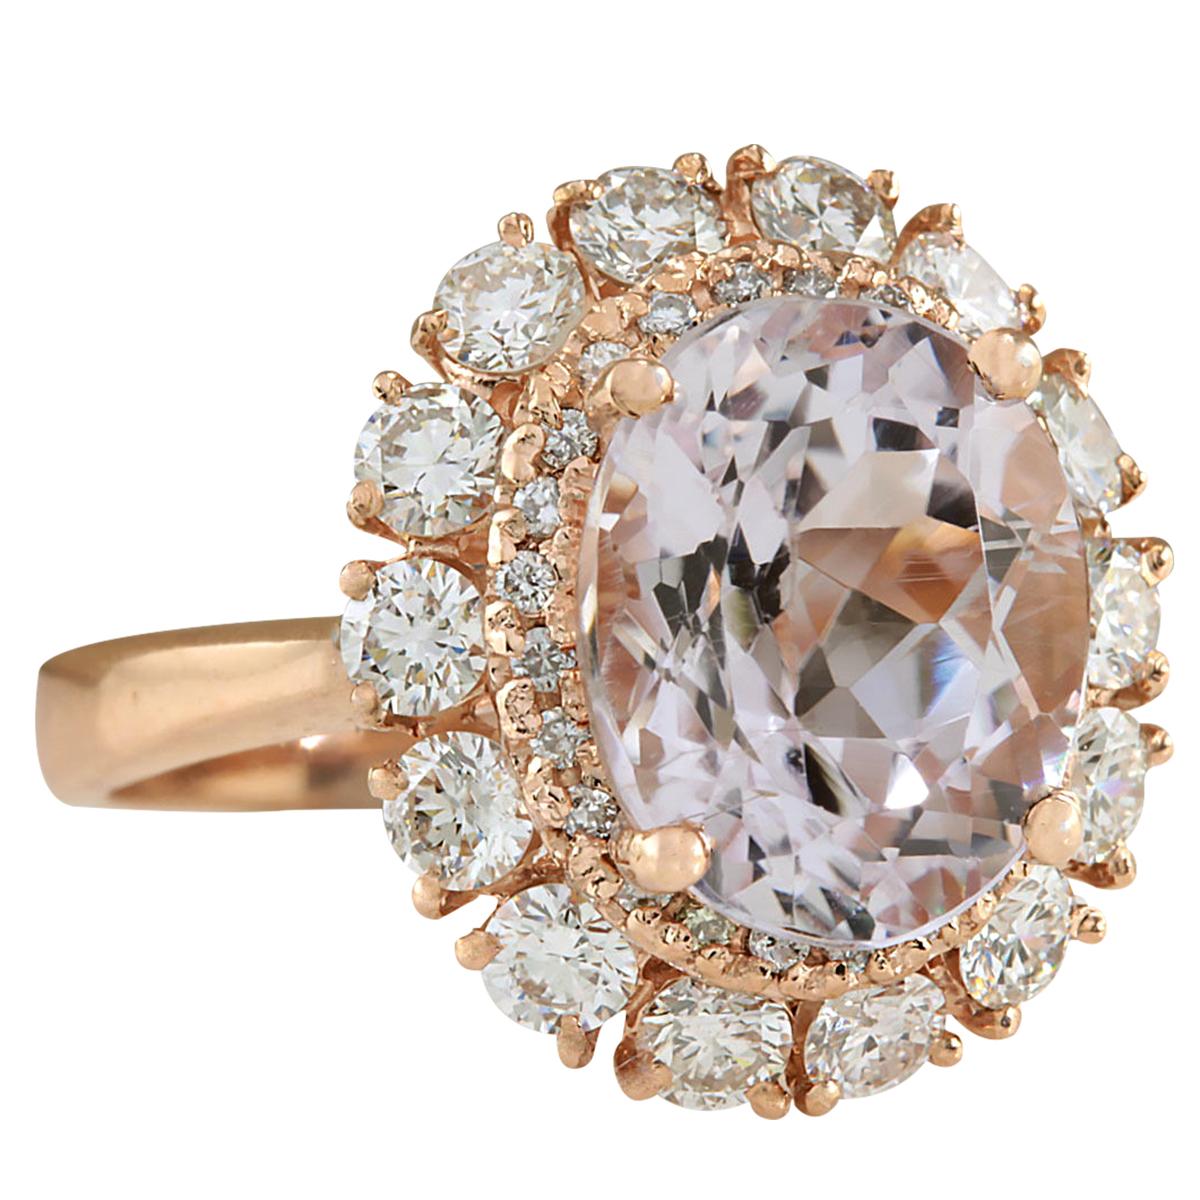 Stamped: 14K Rose Gold
Total Ring Weight: 5.2 Grams
Total Natural Morganite Weight is 4.16 Carat (Measures: 11.00x9.00 mm)
Color: Peach
Total Natural Diamond Weight is 1.50 Carat
Color: F-G, Clarity: VS2-SI1
Face Measures: 16.60x14.90 mm
Sku: